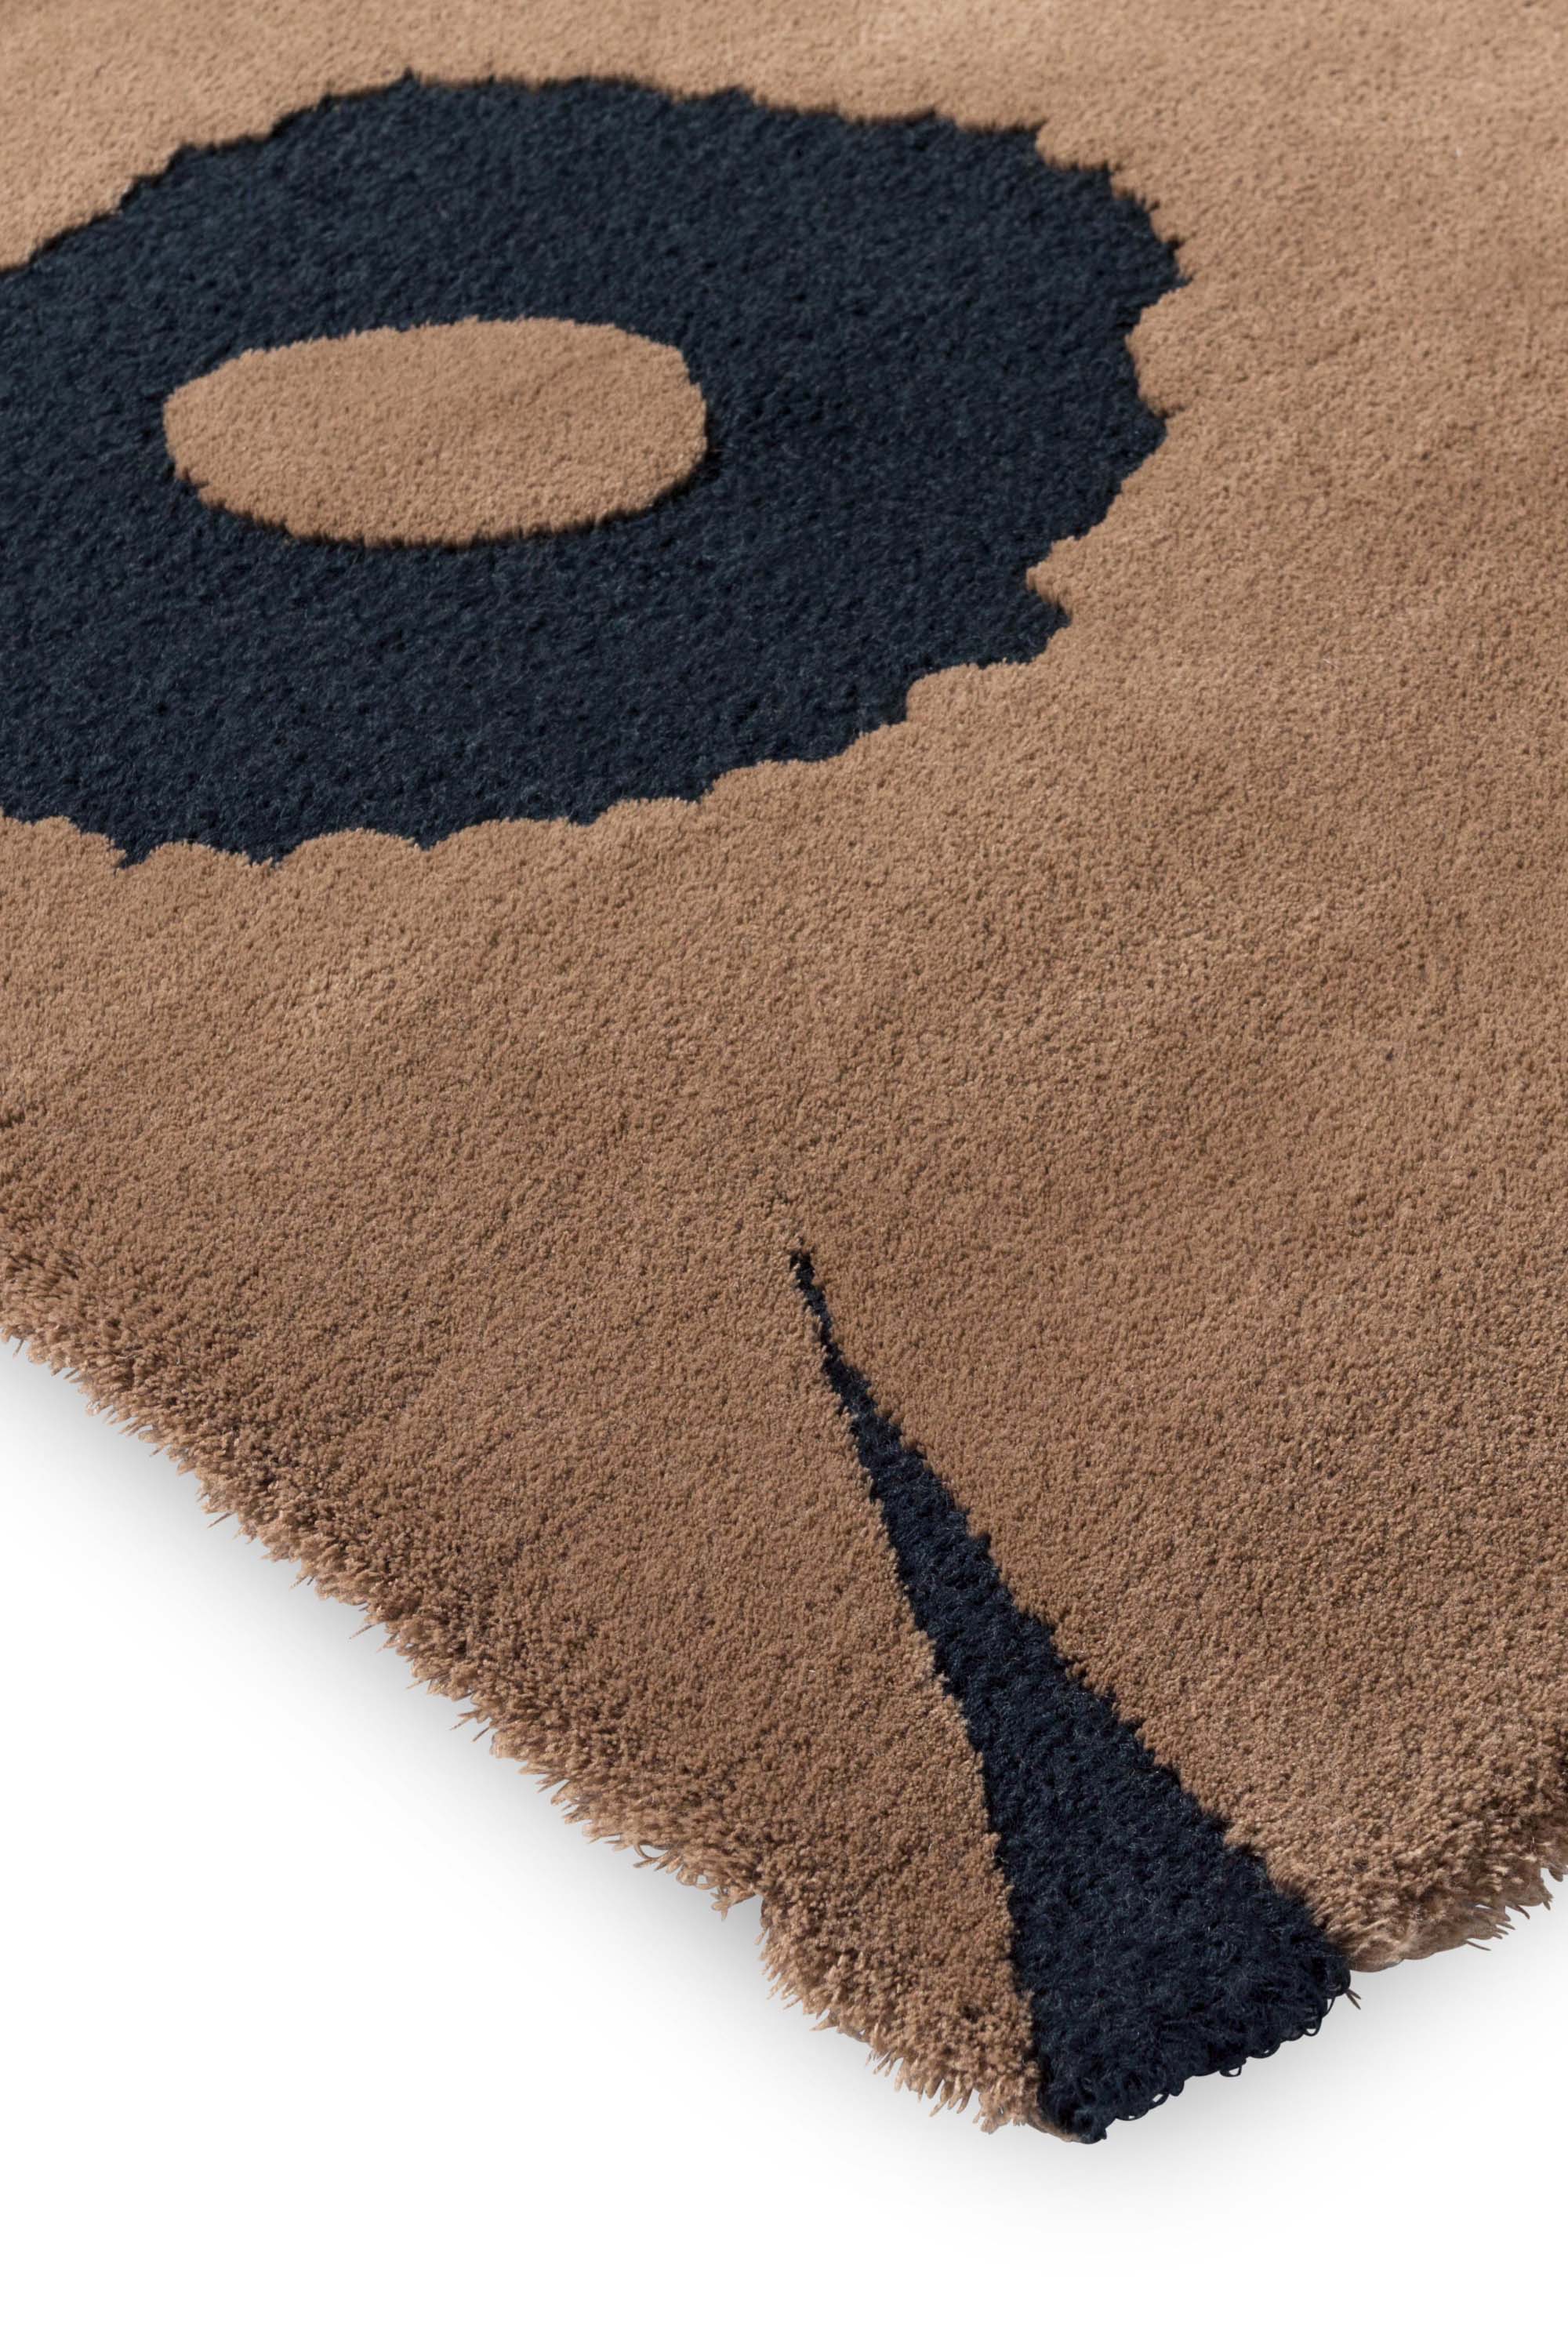 Brown patterned floral rug 